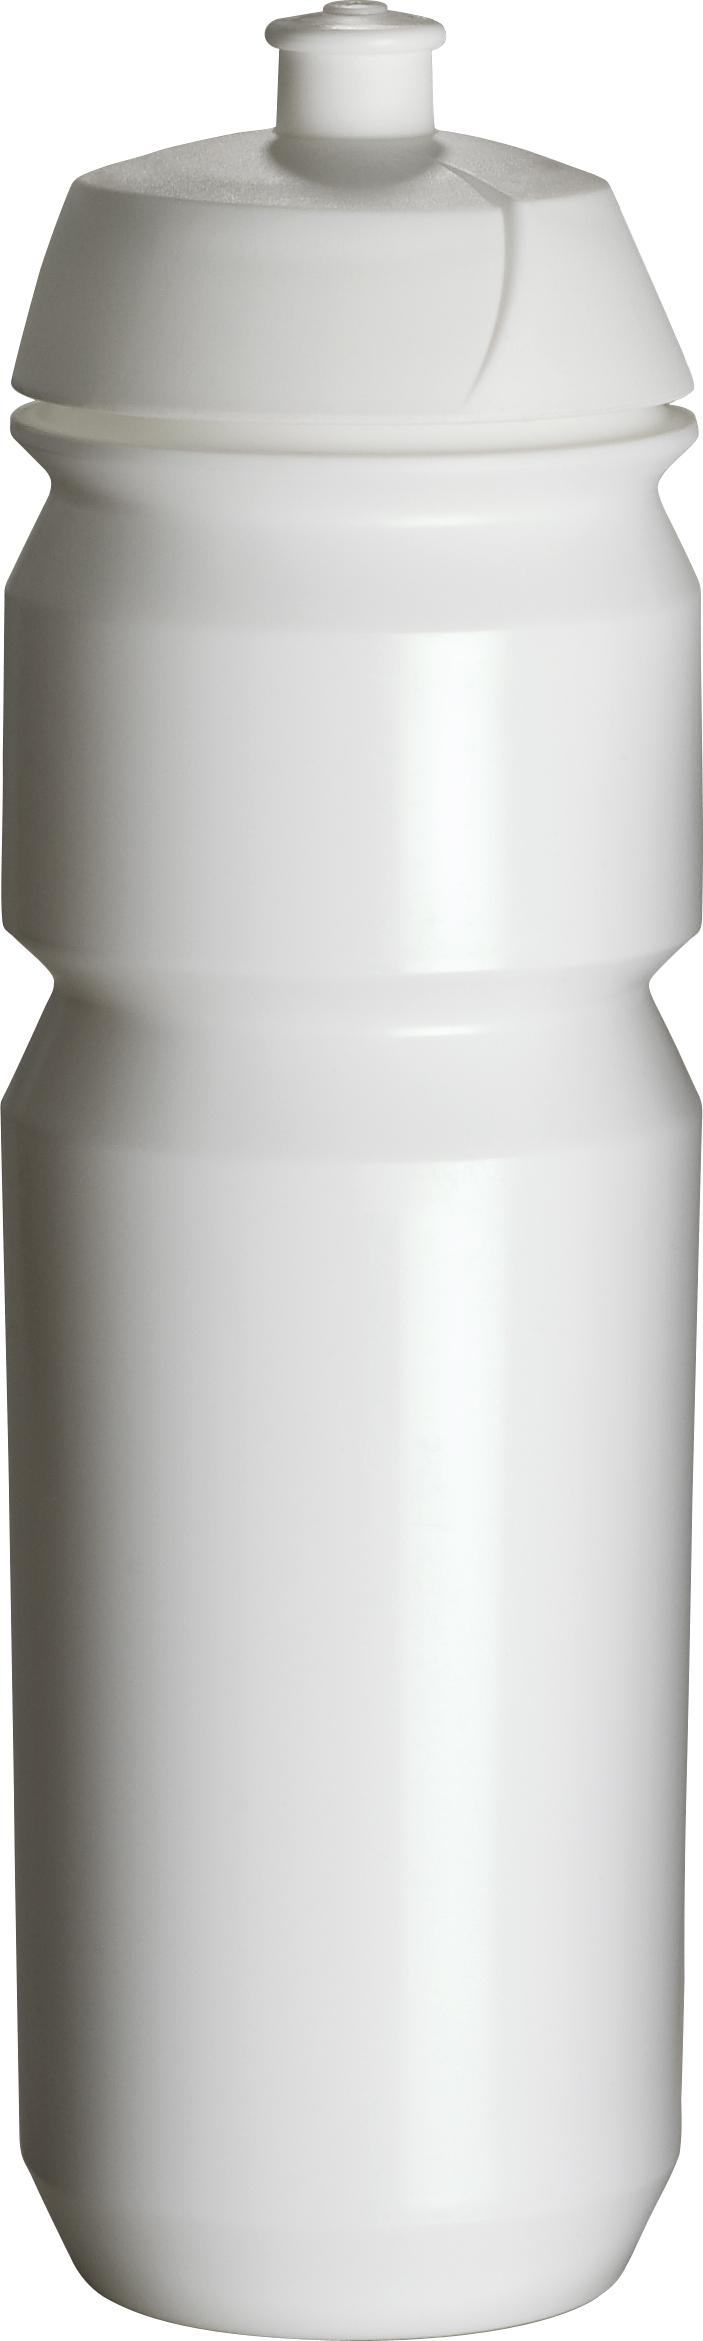 Tacx Shiva 750ml Bottle 2018  White